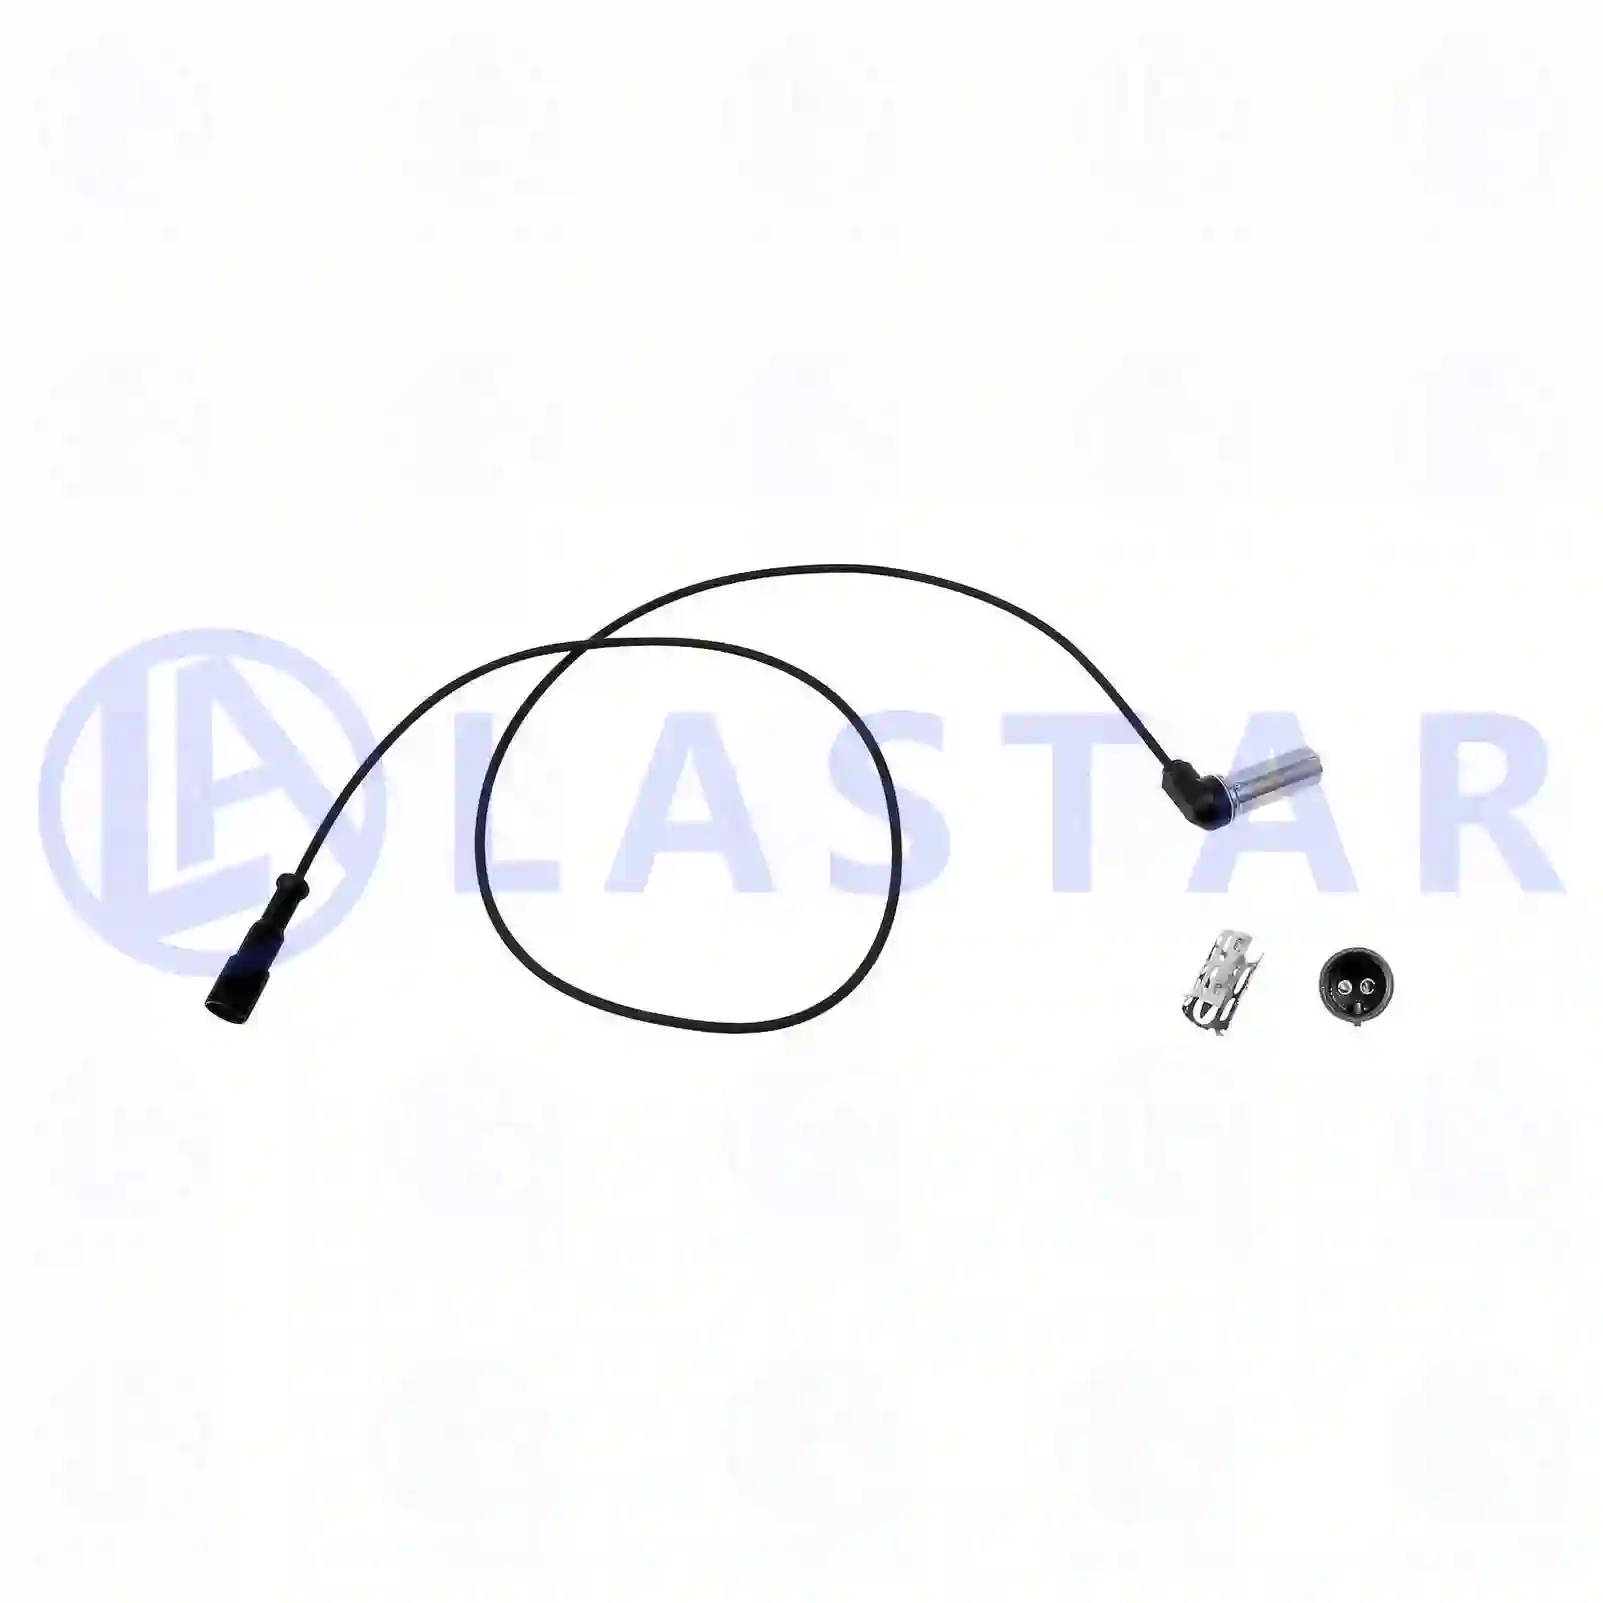  ABS sensor || Lastar Spare Part | Truck Spare Parts, Auotomotive Spare Parts